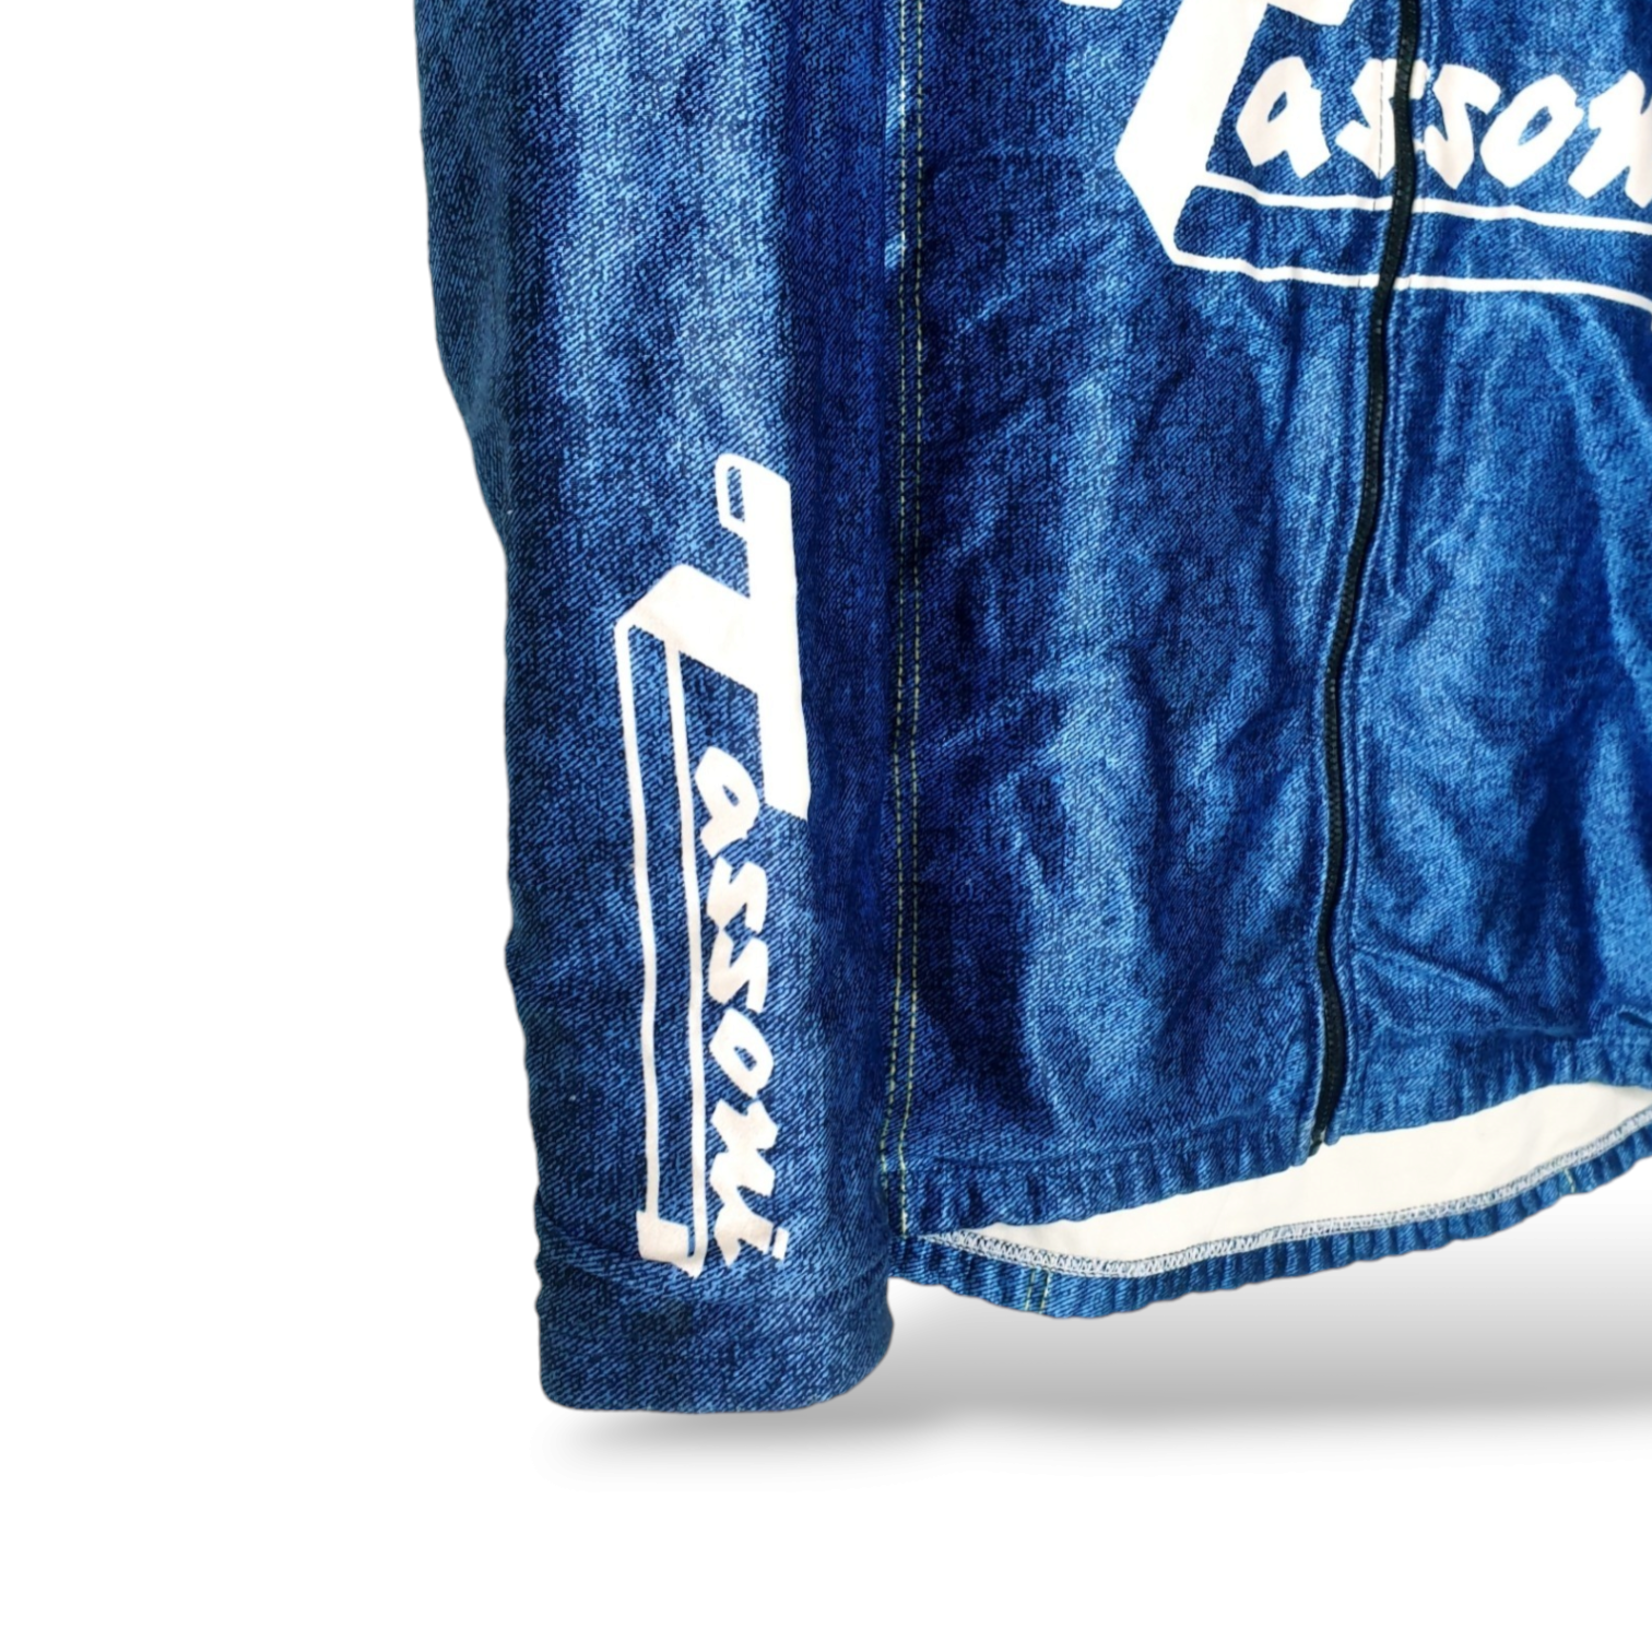 Nalini Original Nalini vintage cycling jacket Carrera Jeans - Tassoni 1993